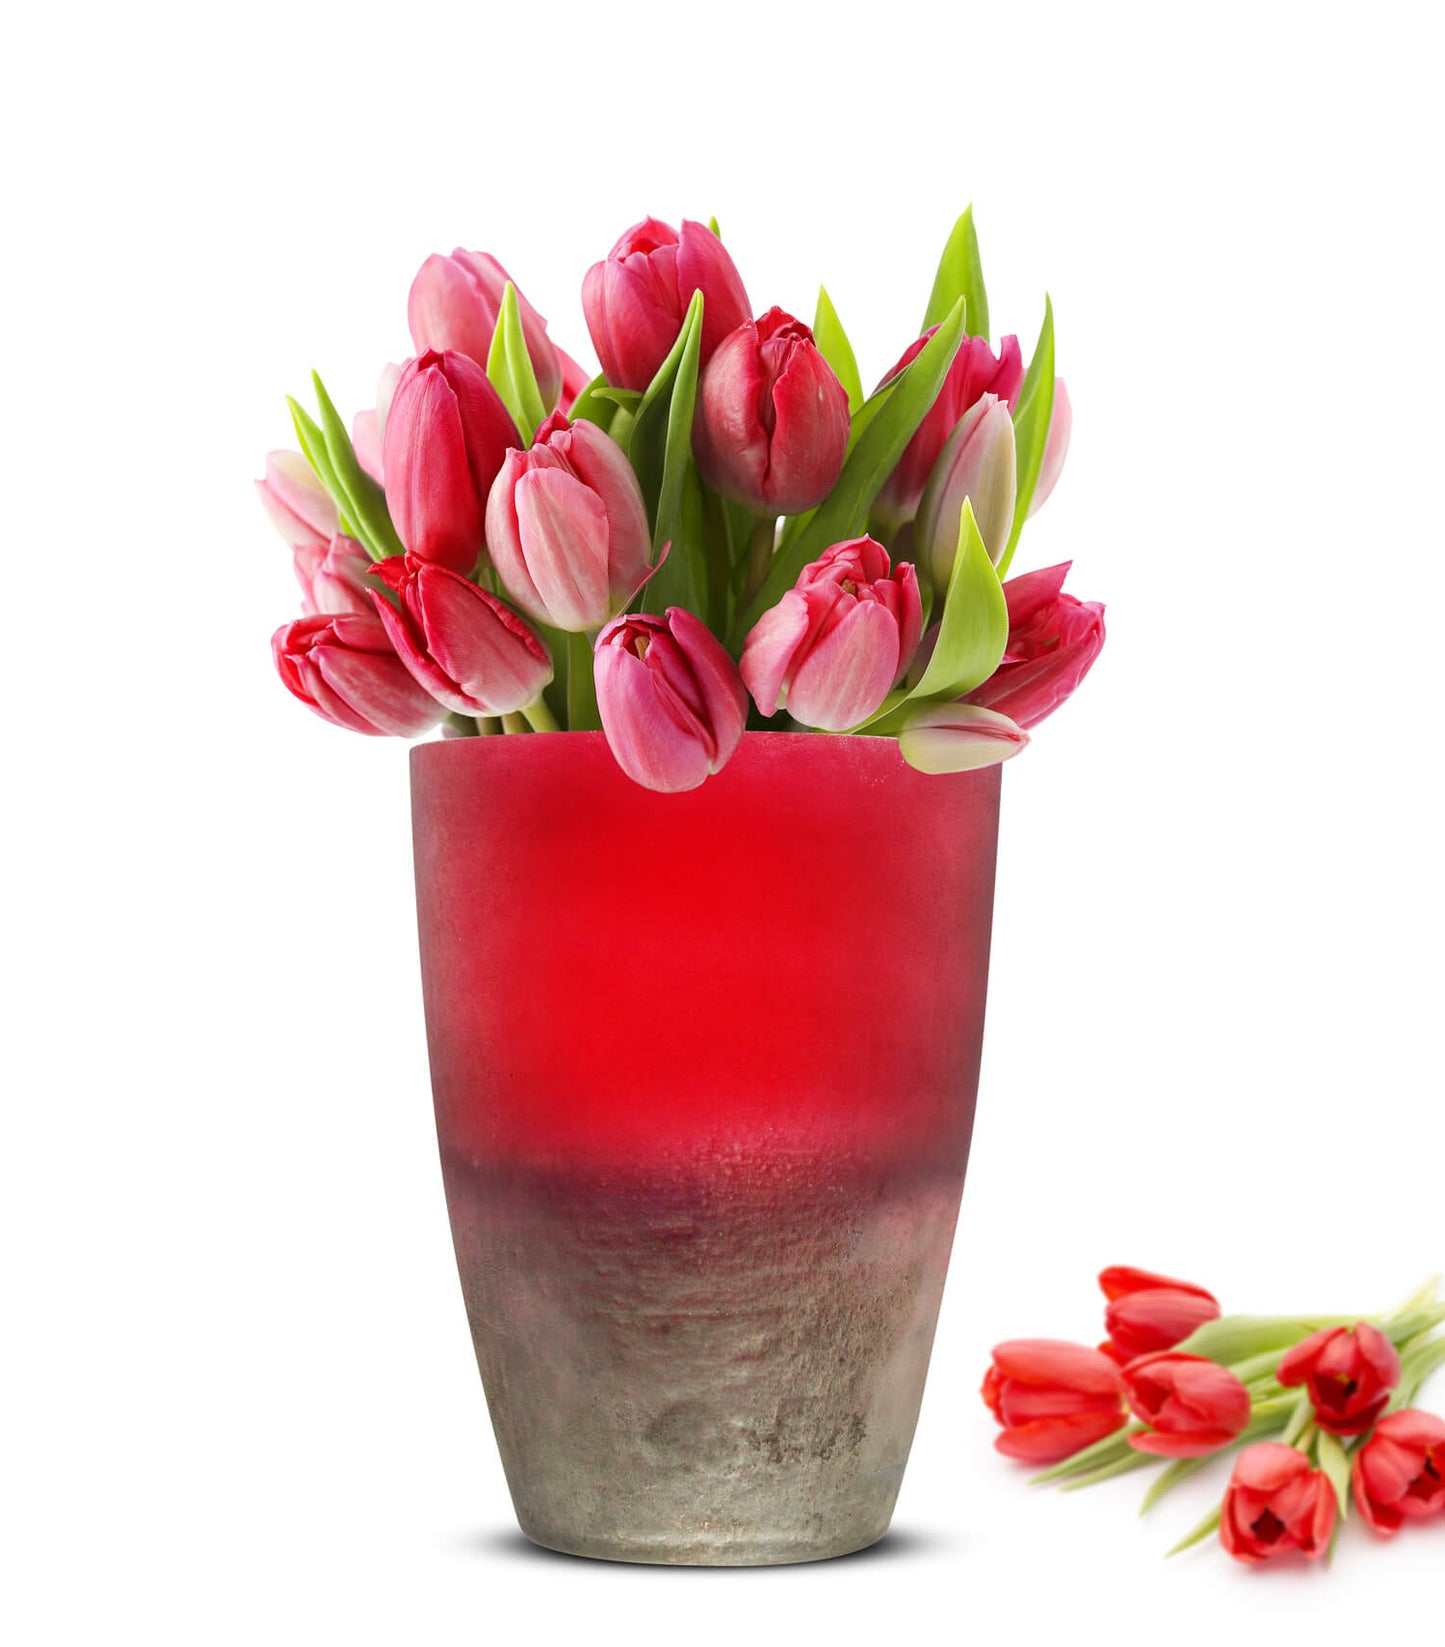 Flower vase Oxi vase table vase glass vase decorative vase flower pot plant pot